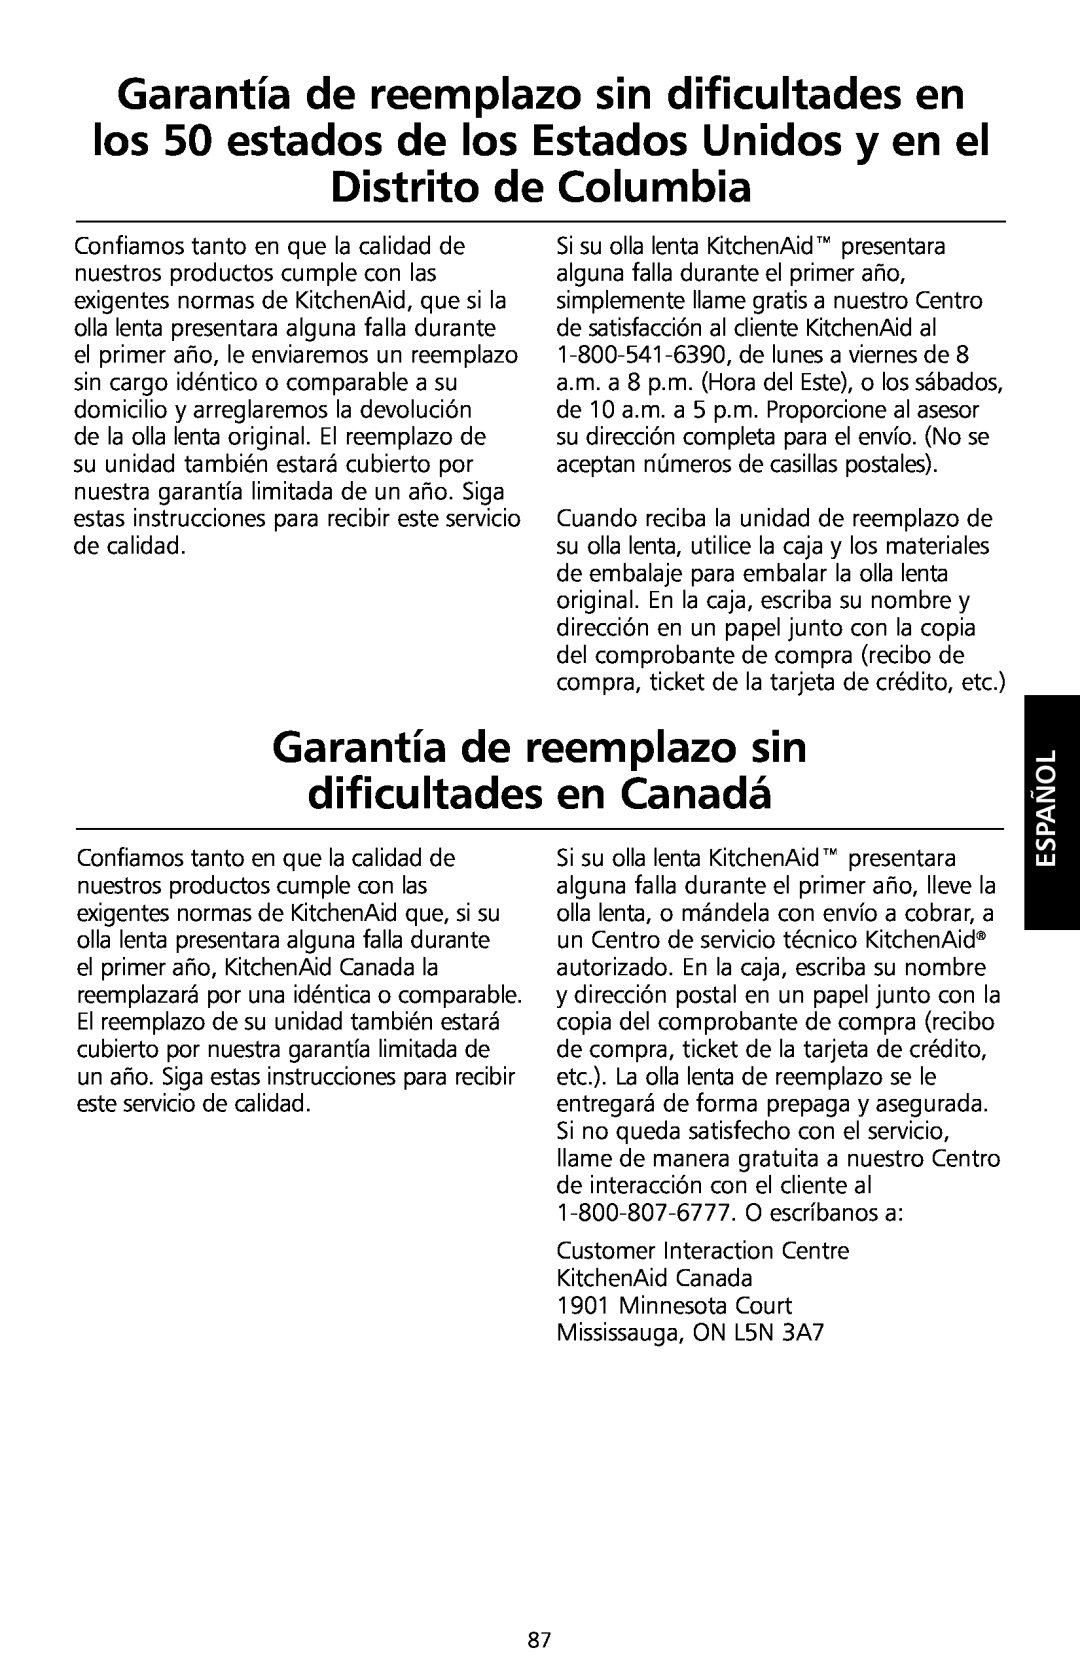 KitchenAid KSC700 manual Garantía de reemplazo sin dificultades en Canadá, Español, Mississauga, ON L5N 3A7 